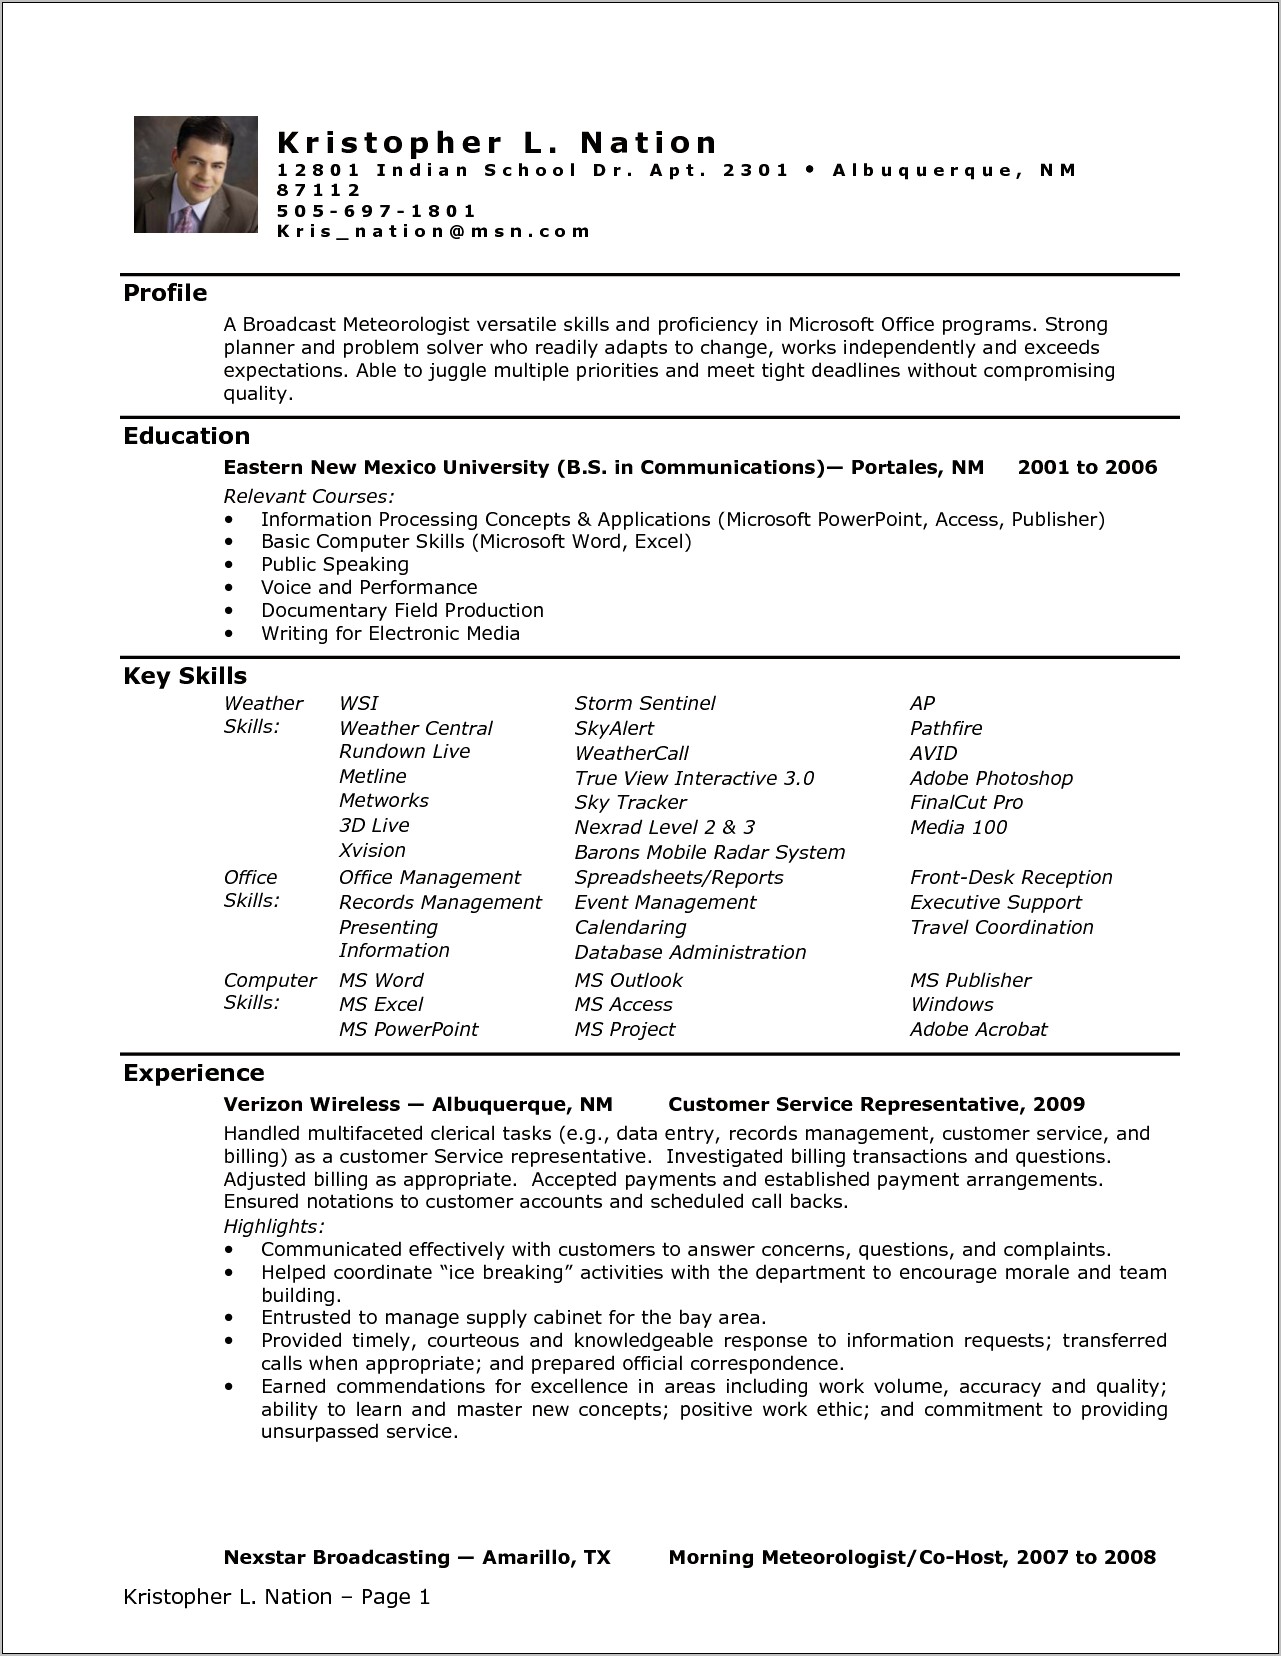 Entry Level Medical Assistant Resume Objectives